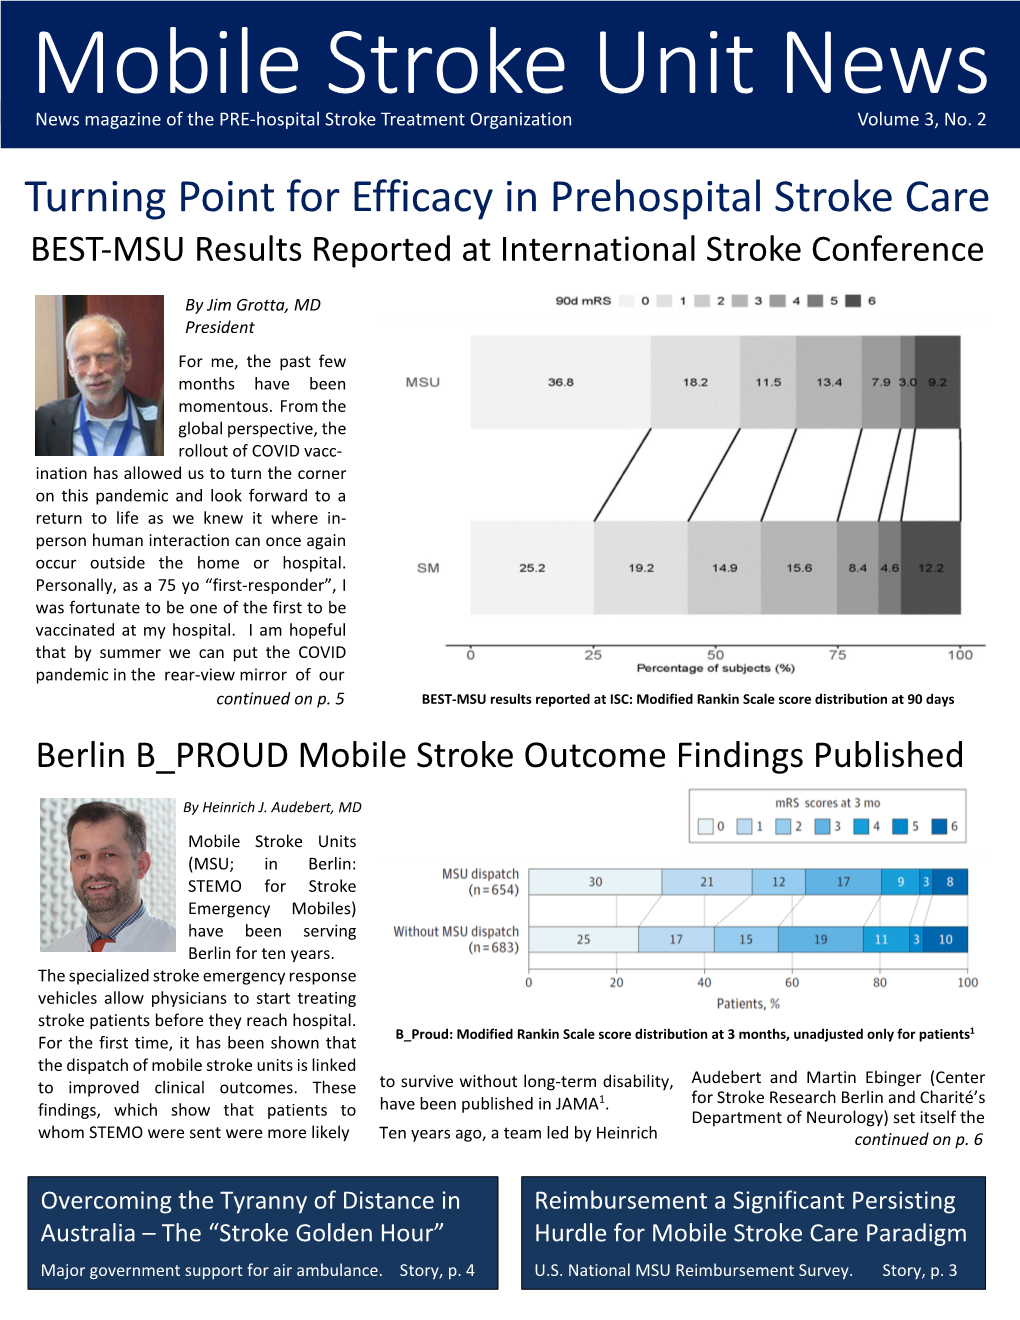 Mobile Stroke Unit News News Magazine of the PRE-Hospital Stroke Treatment Organization Volume 3, No